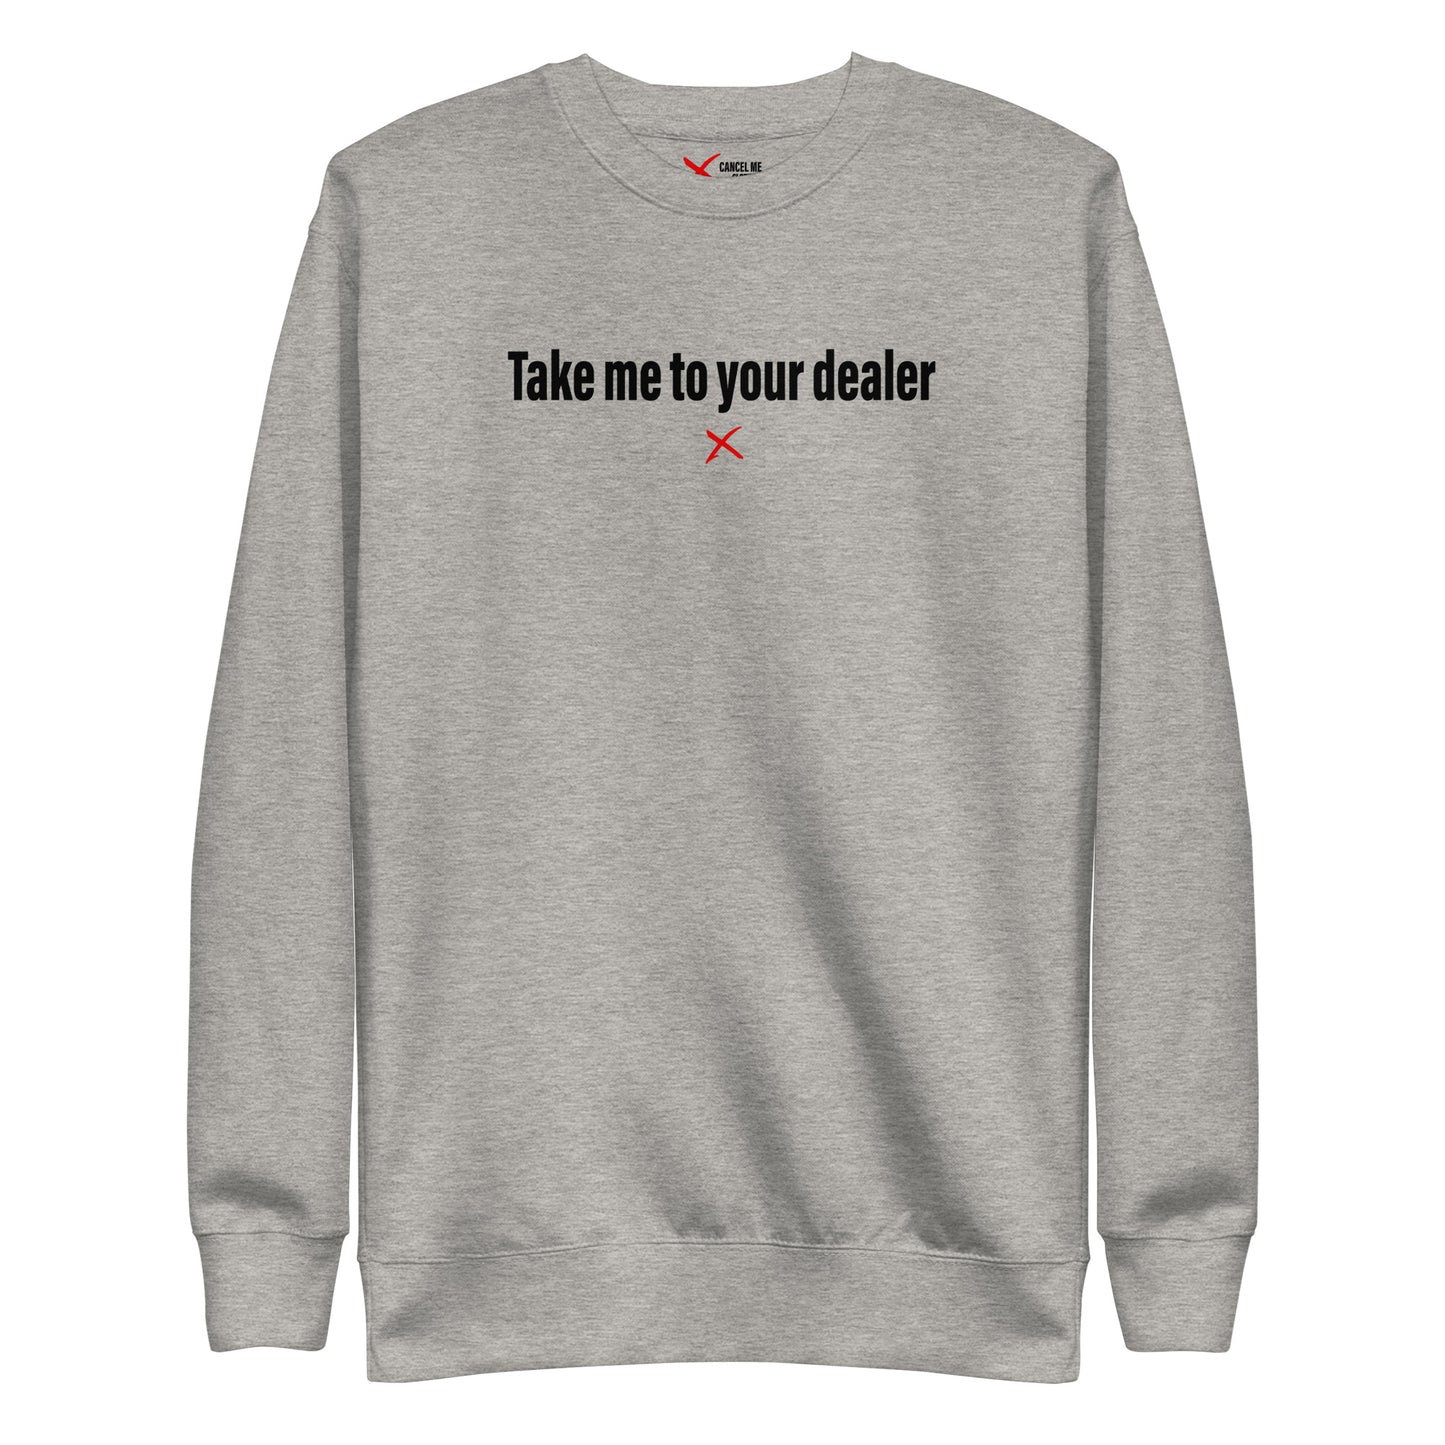 Take me to your dealer - Sweatshirt